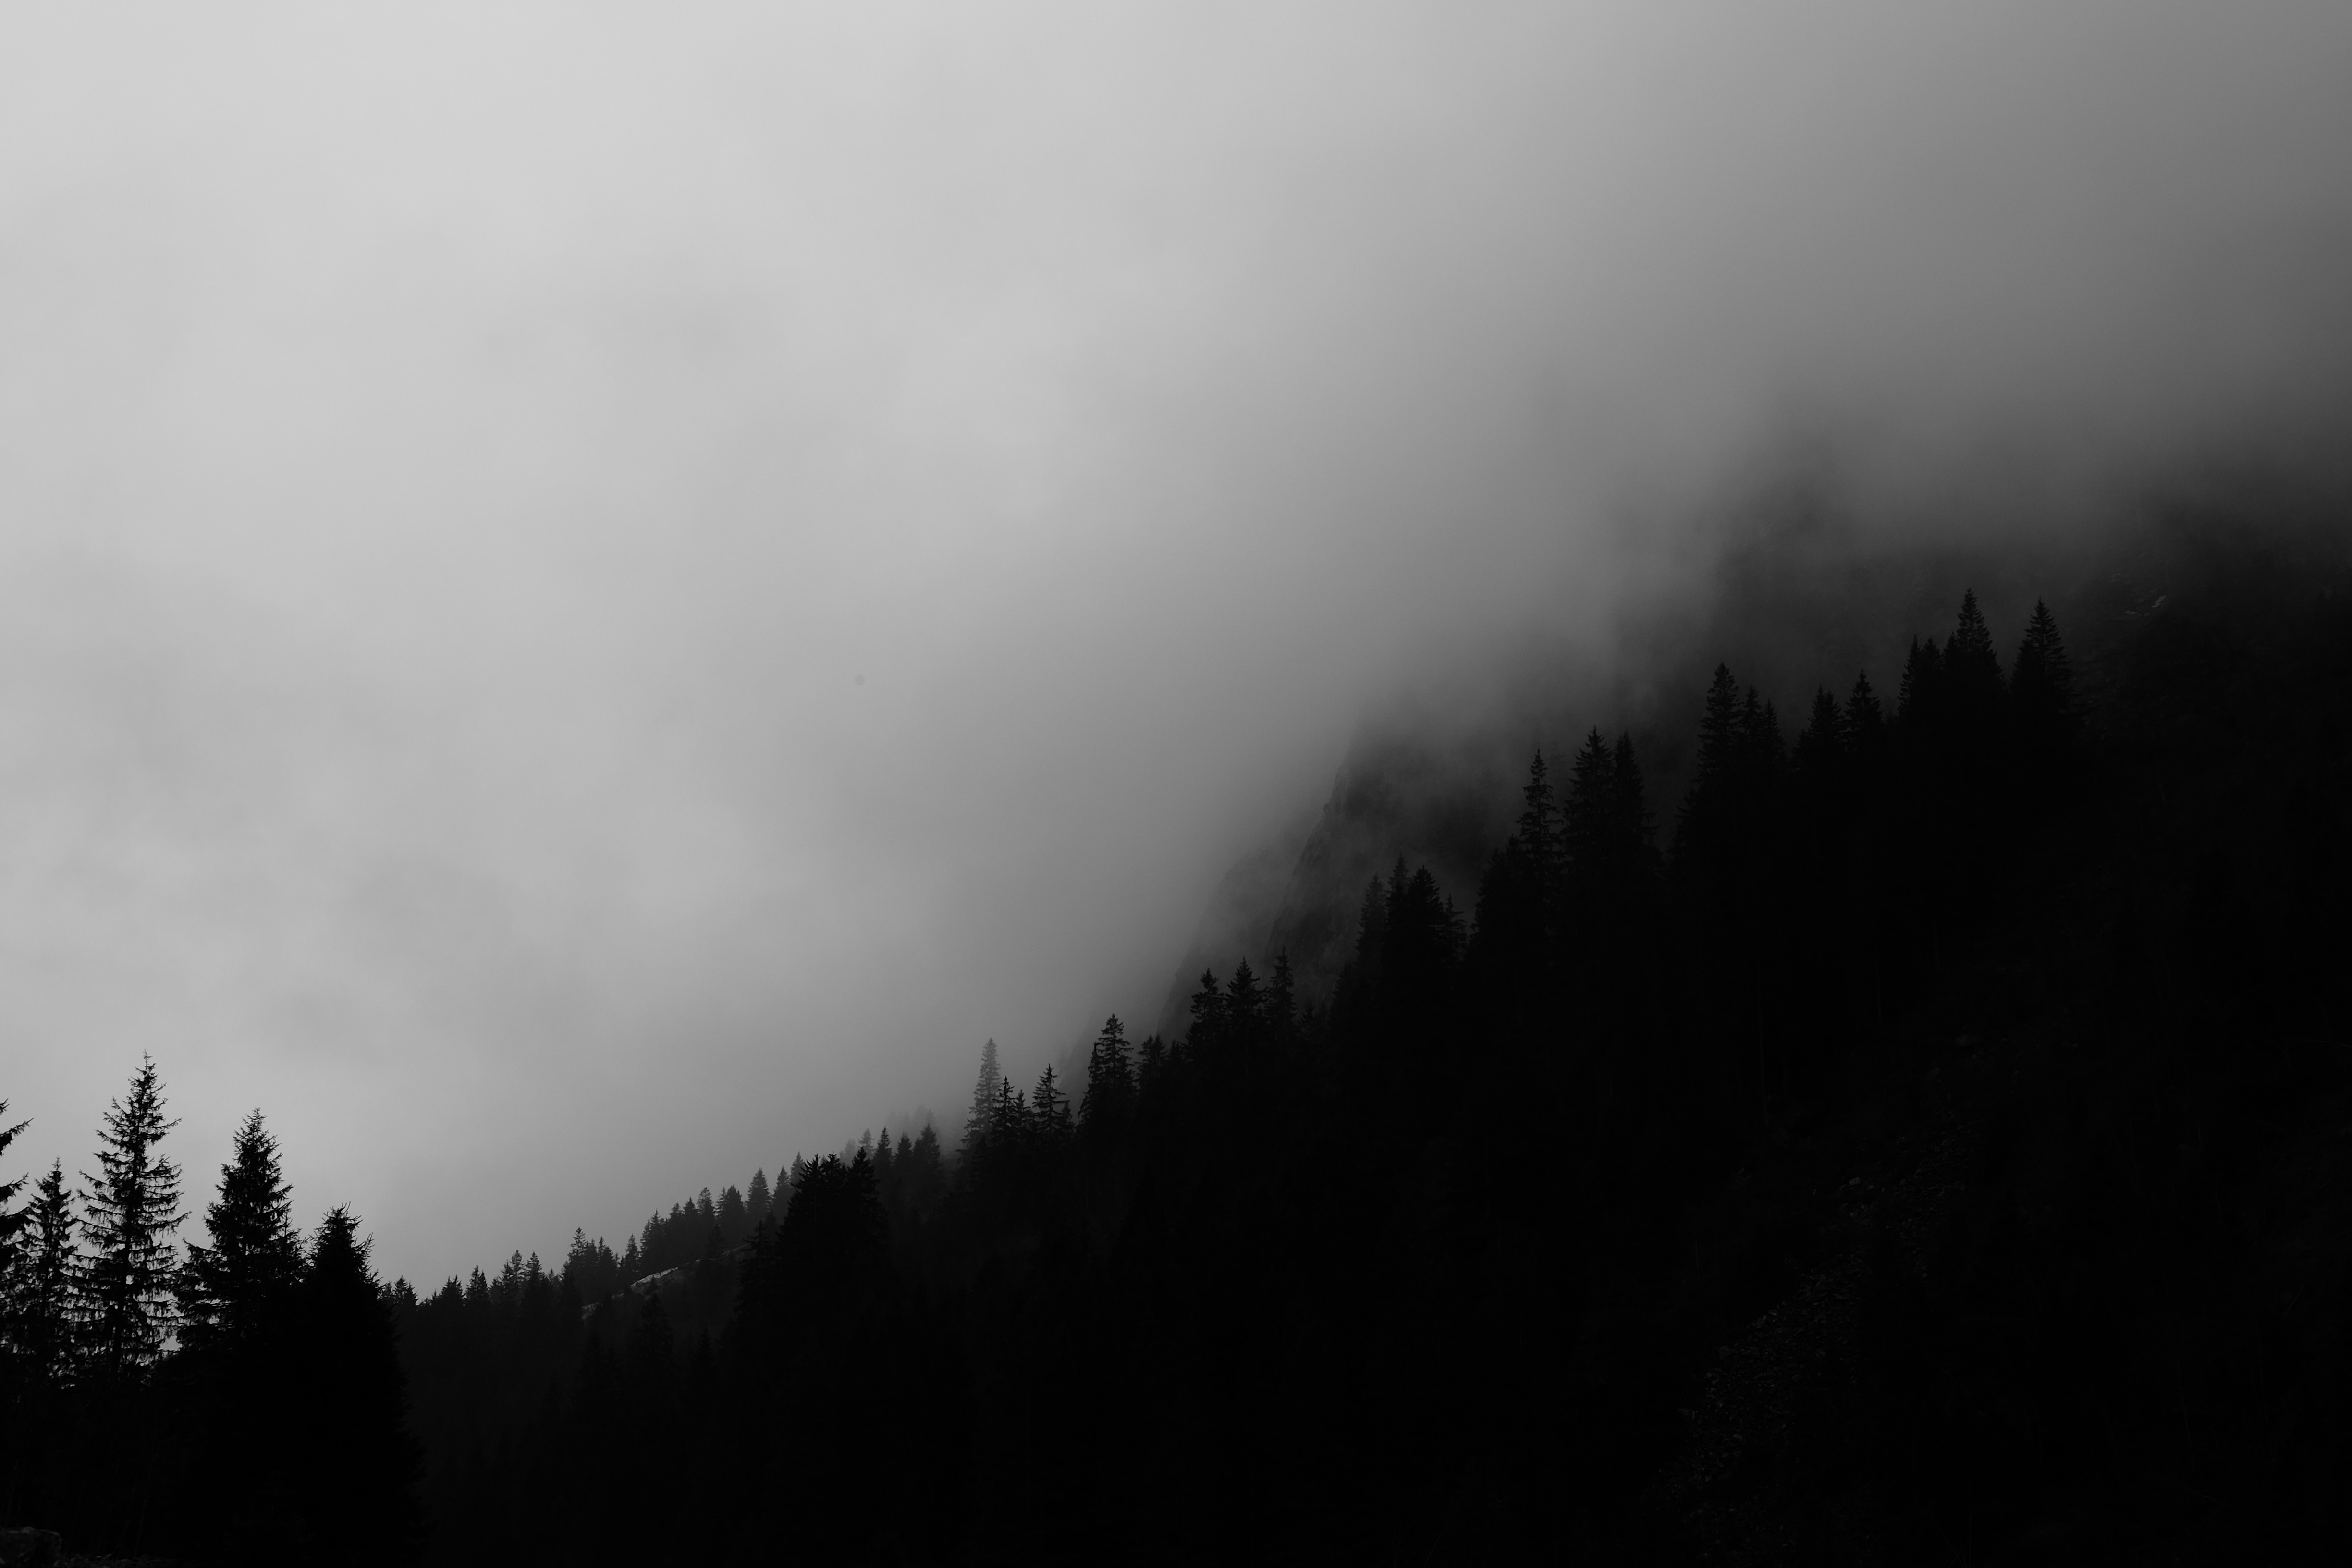 dark, bw, black, trees, forest, fog, chb iphone wallpaper